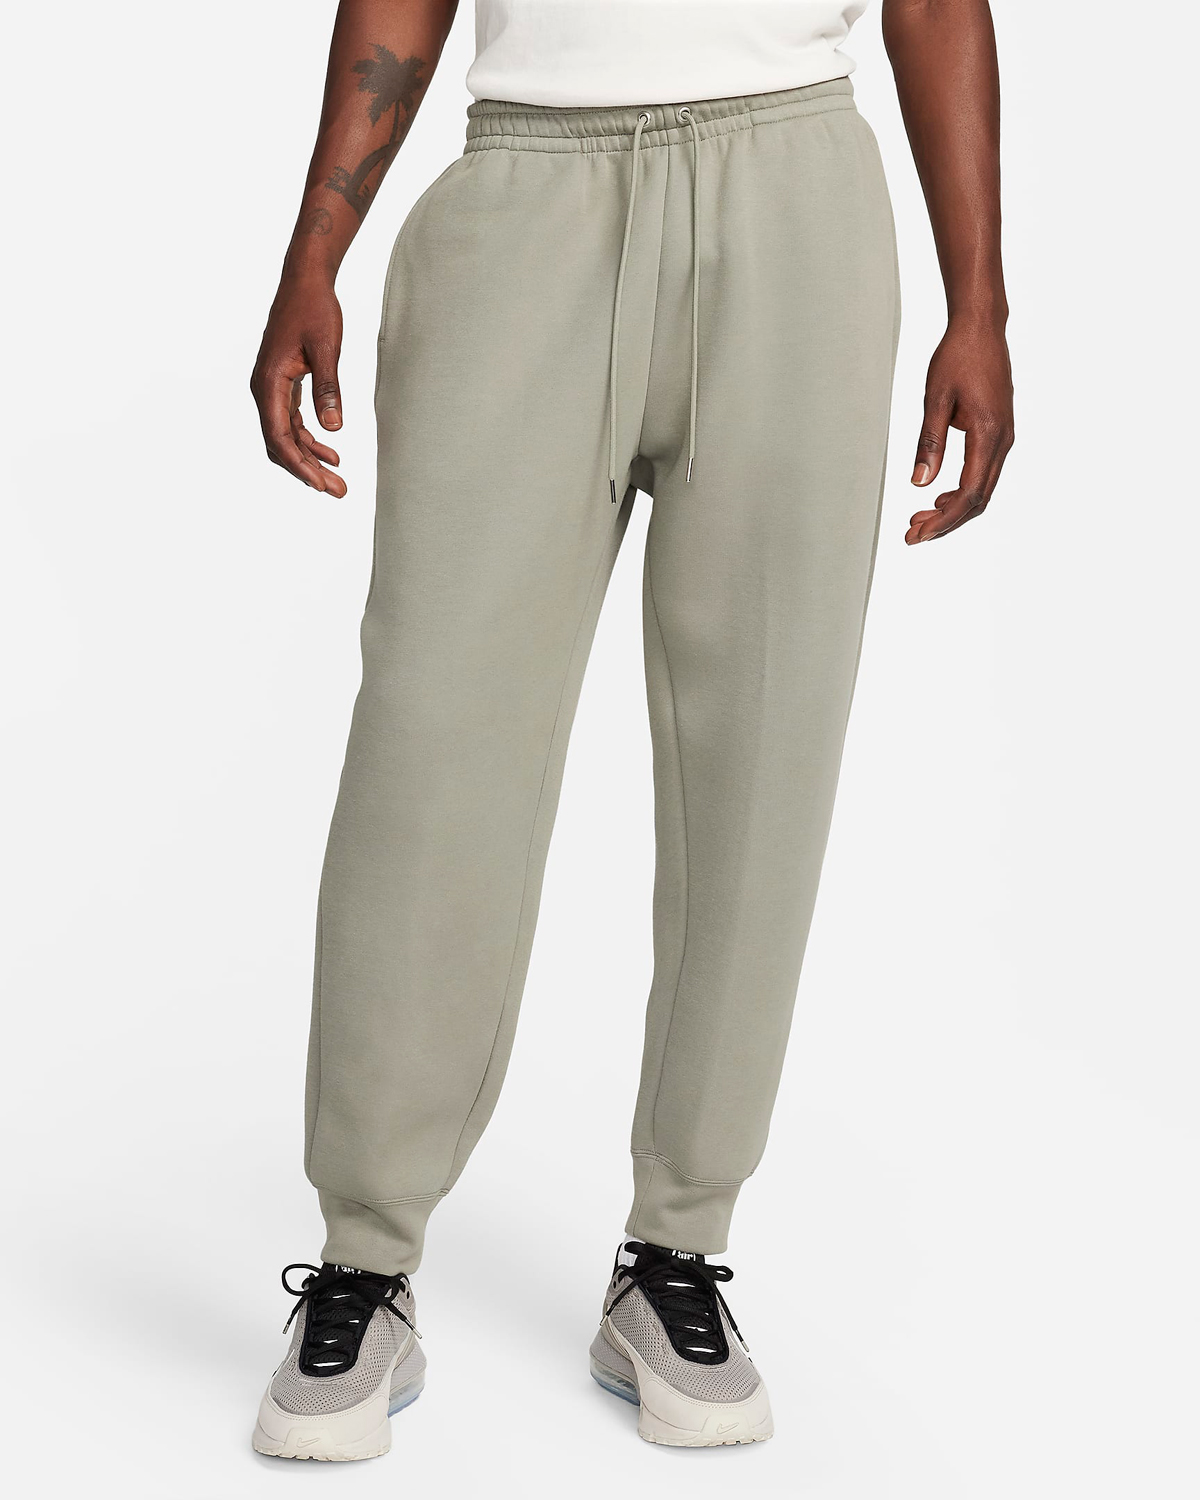 Nike-Tech-Fleece-Reimagined-Pants-Dark-Stucco